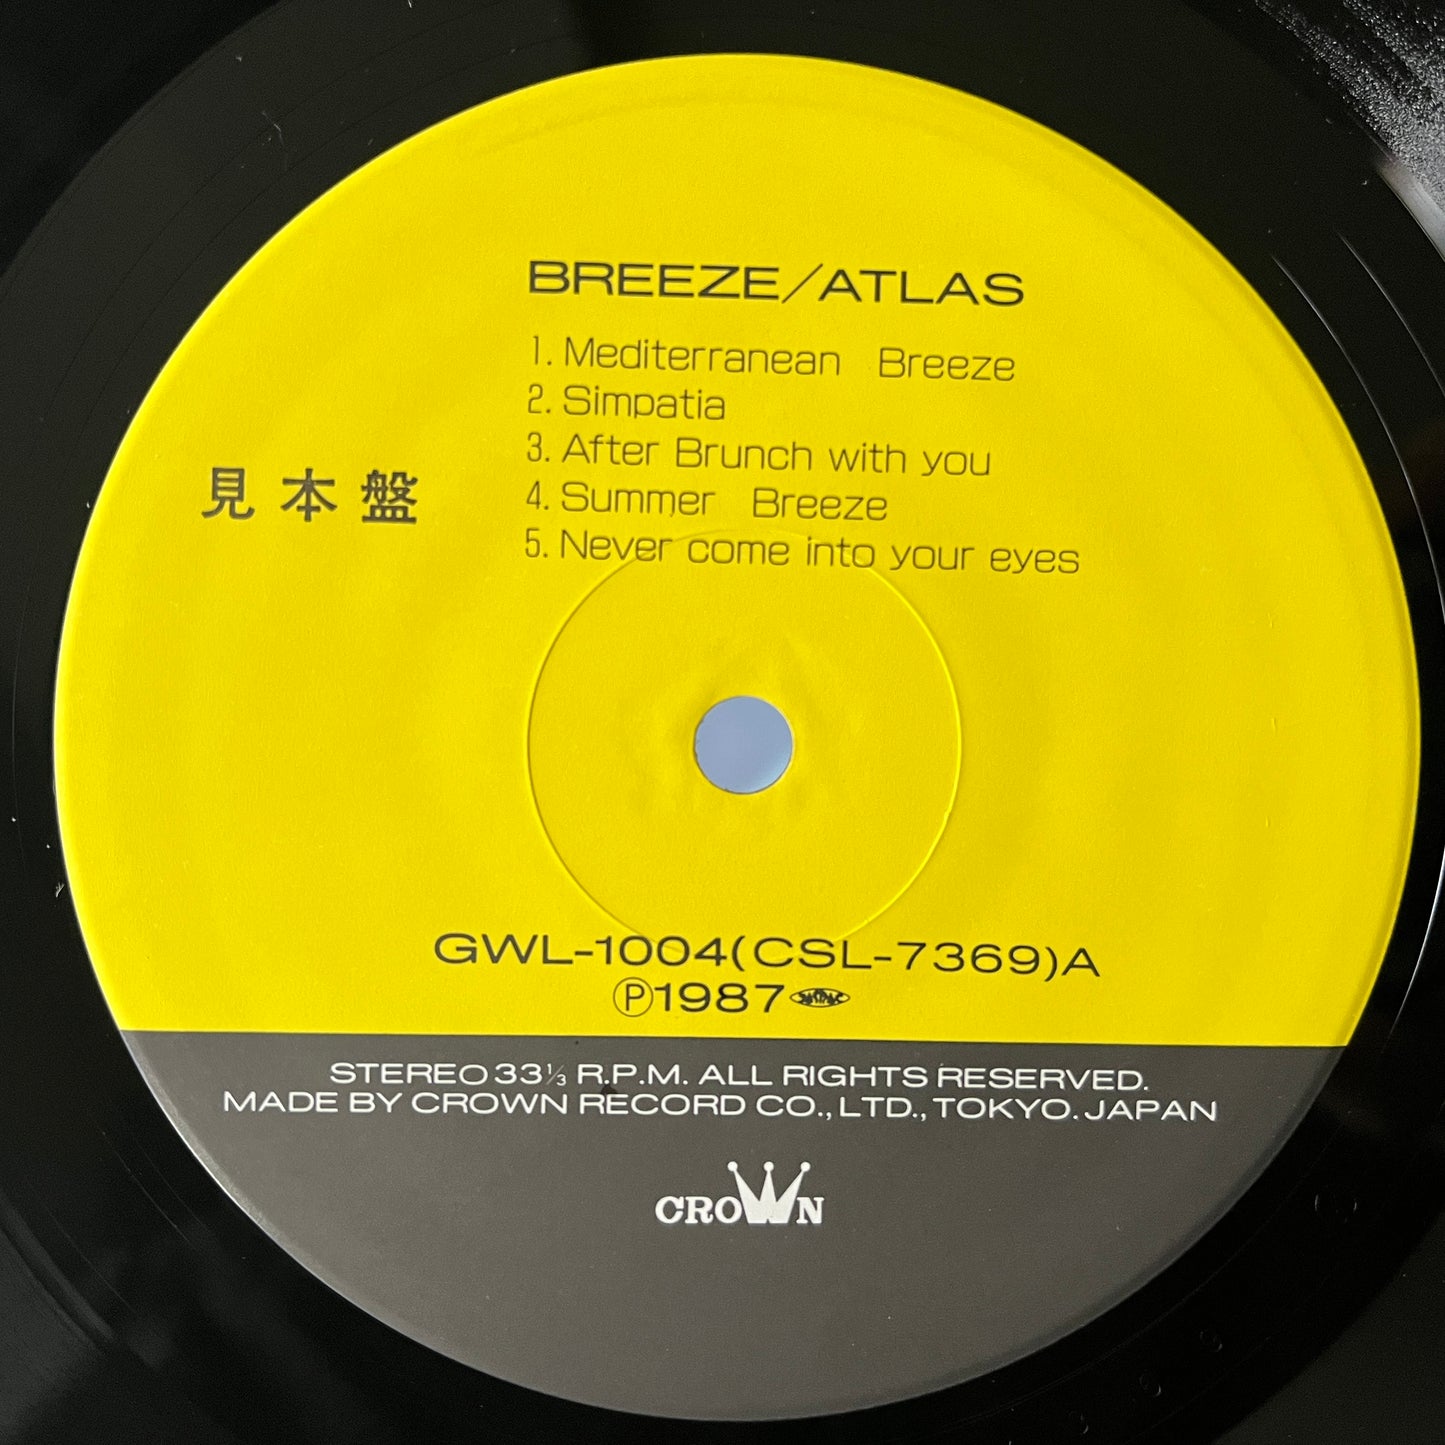 Atlas – Breeze